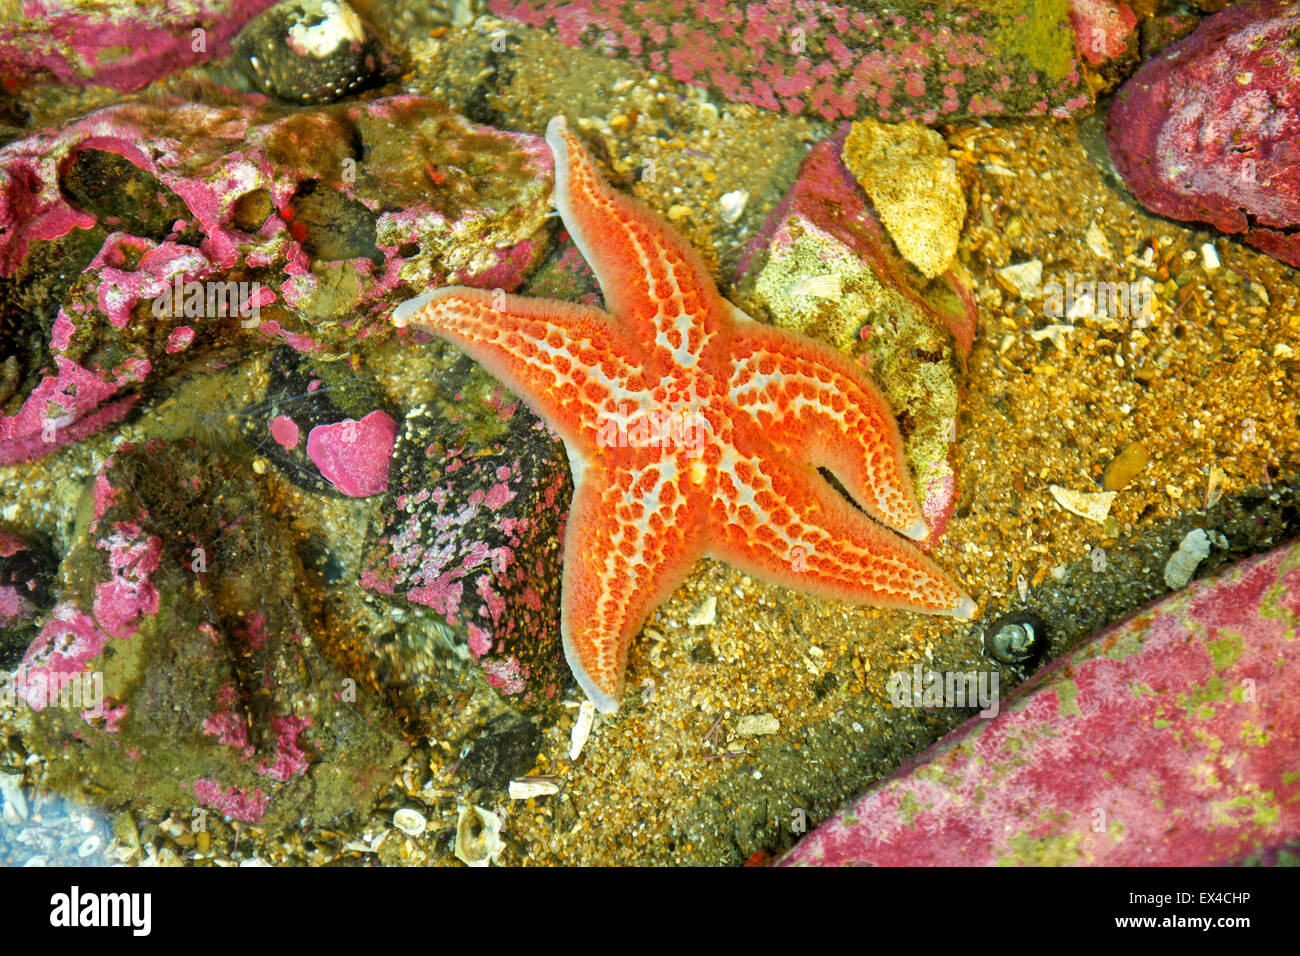 A seastar, or sunstar, in a shallow tidal pool along the pacific northwest coast near Newport, Oregon Stock Photo